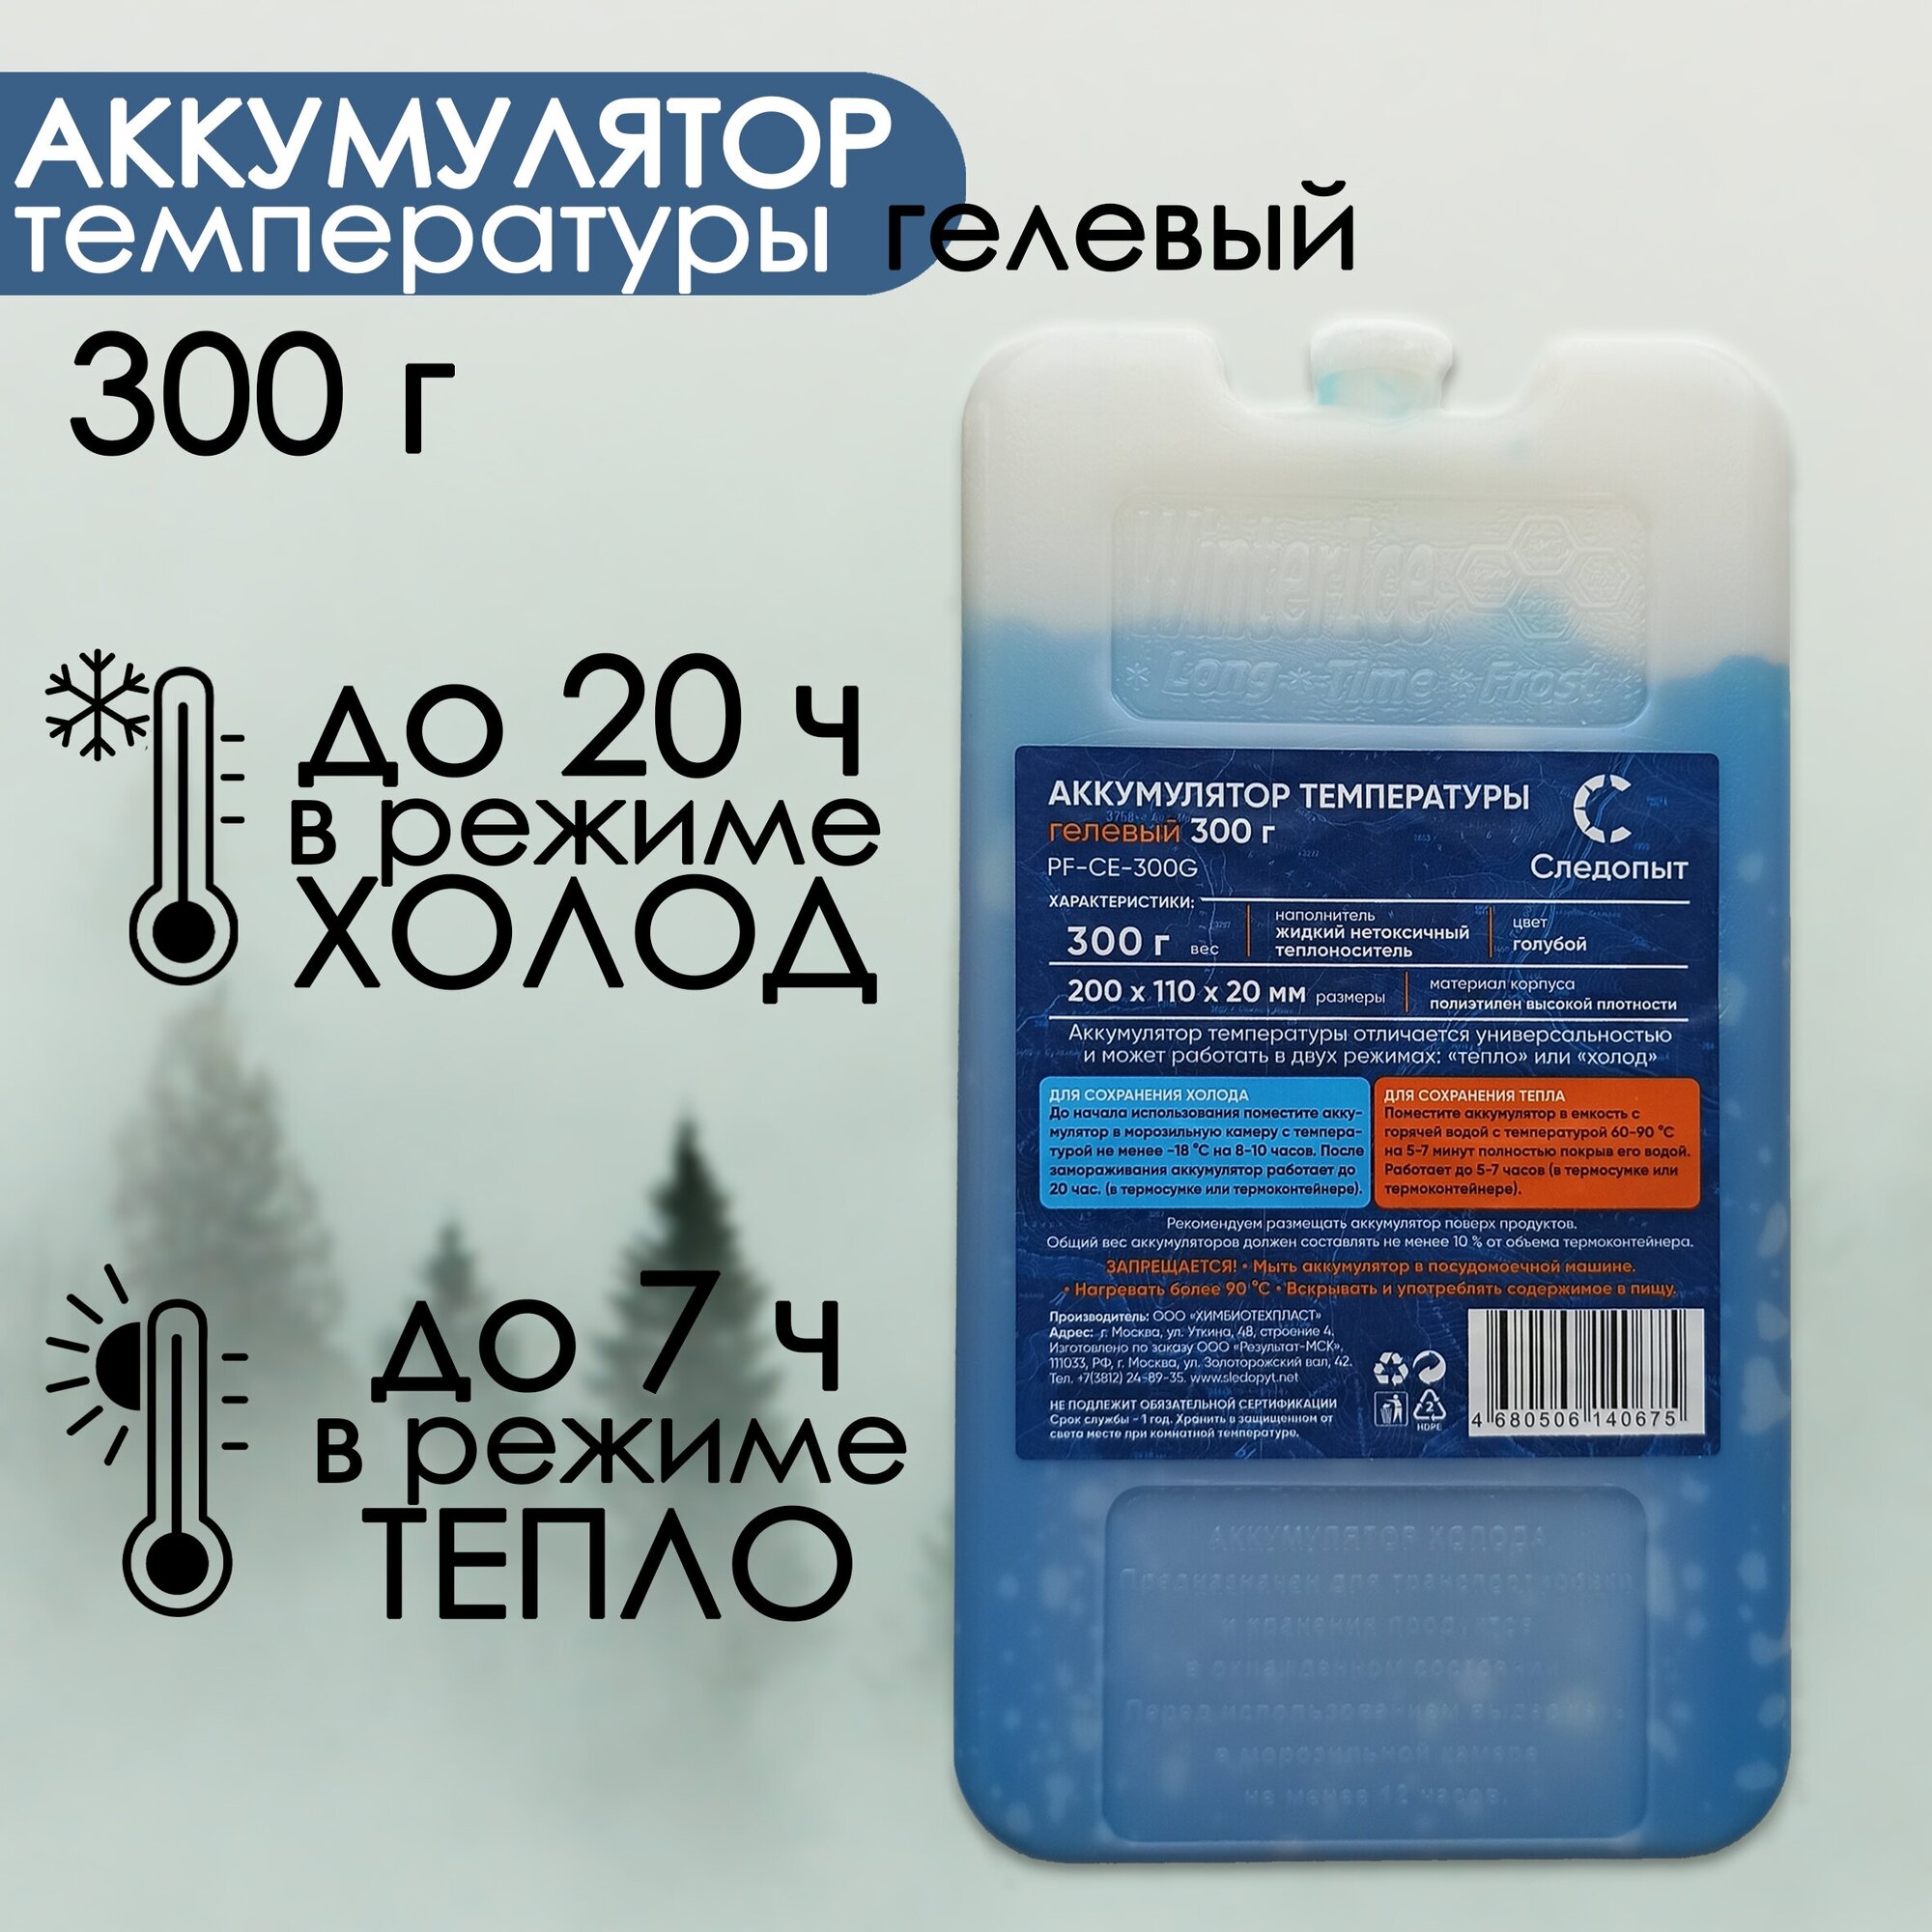 Аккумулятор холода гелевый для термосумки, Следопыт, 300 гр, 1 шт.